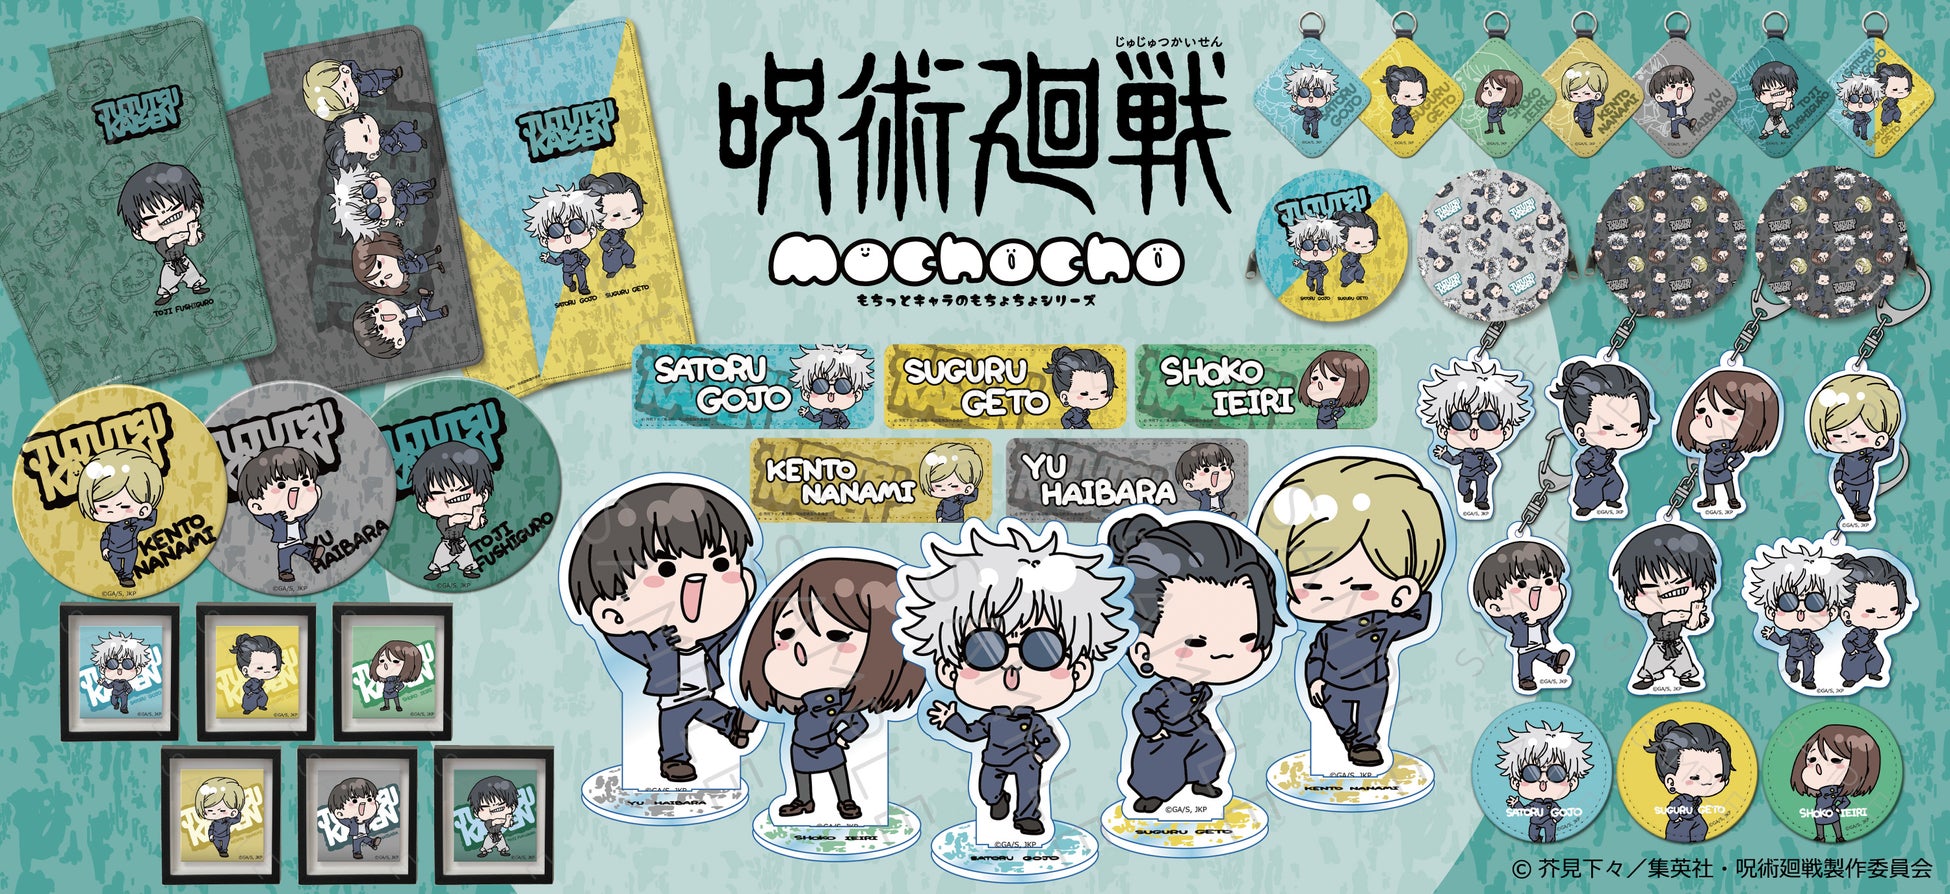 TVアニメ『絆のアリル』POP UP STOREが、GiGO・ハンズ・東京キャラクターストリートの5店舗で開催決定！「PathTLive」メンバーとキズナアイ6名の描き下ろしイラストグッズを多数販売！